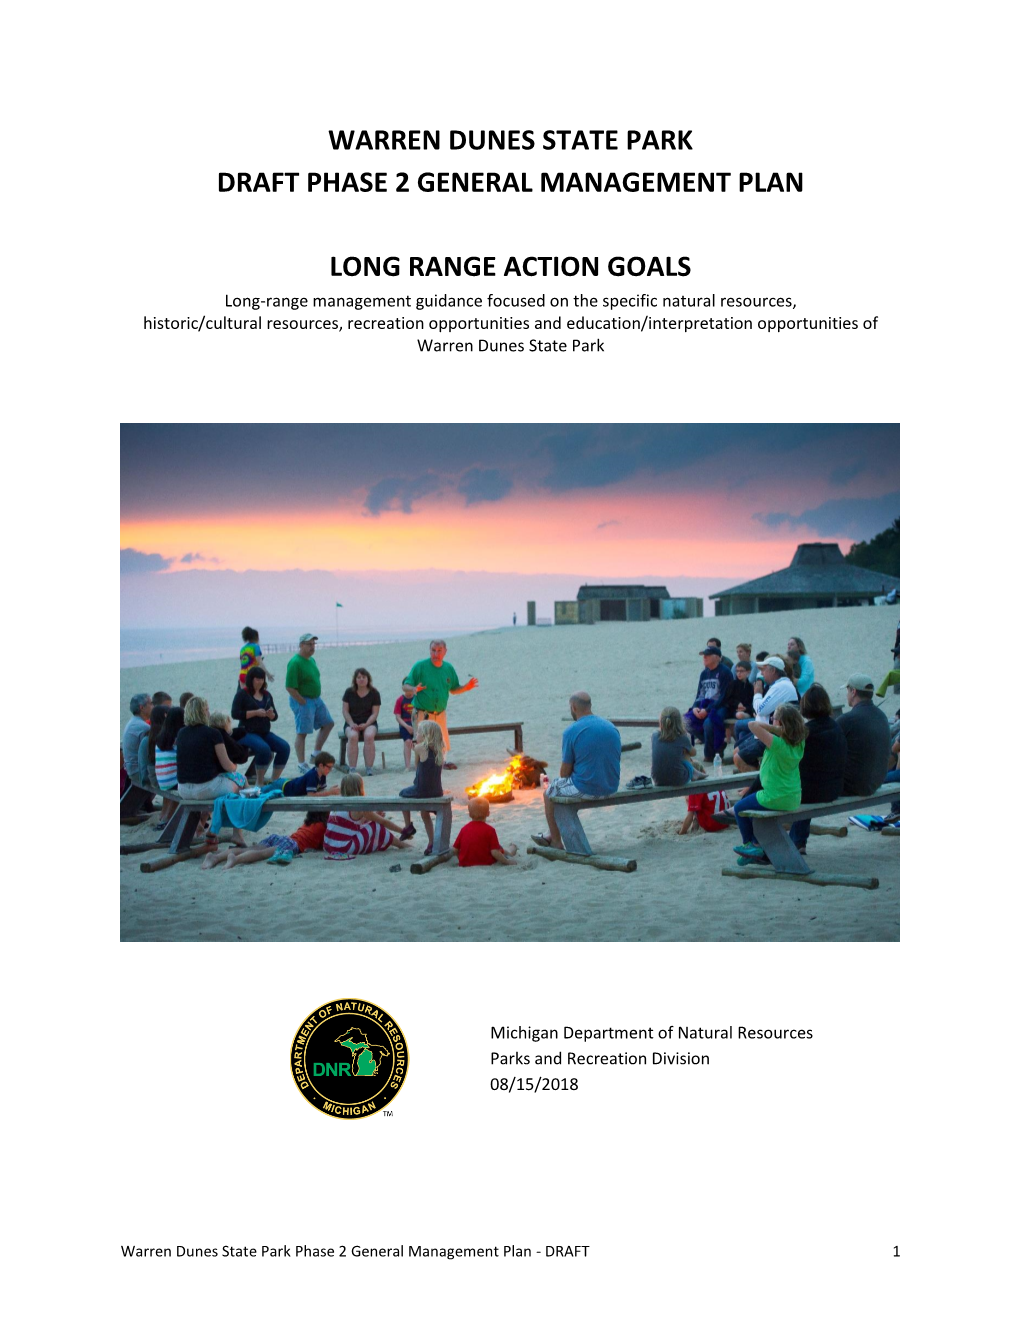 Warren Dunes State Park Phase 2 General Management Plan - DRAFT 1